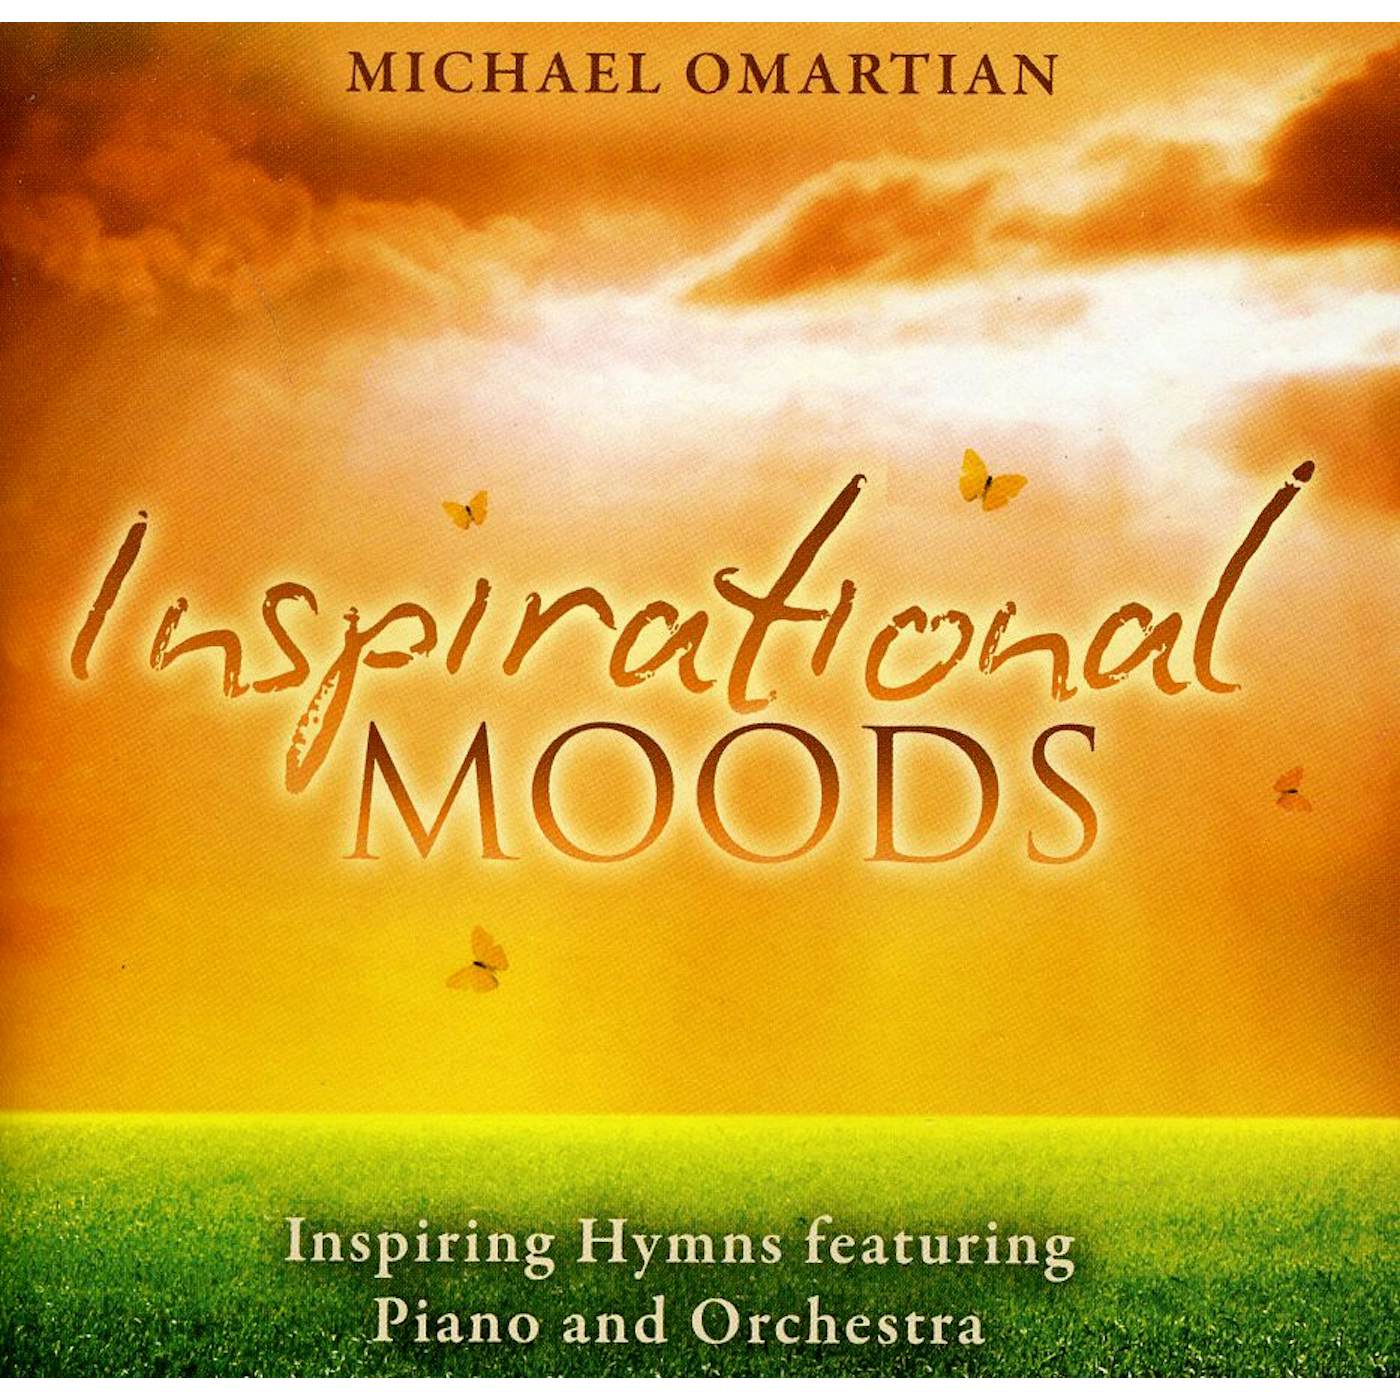 Michael Omartian INSPIRATIONAL MOODS CD